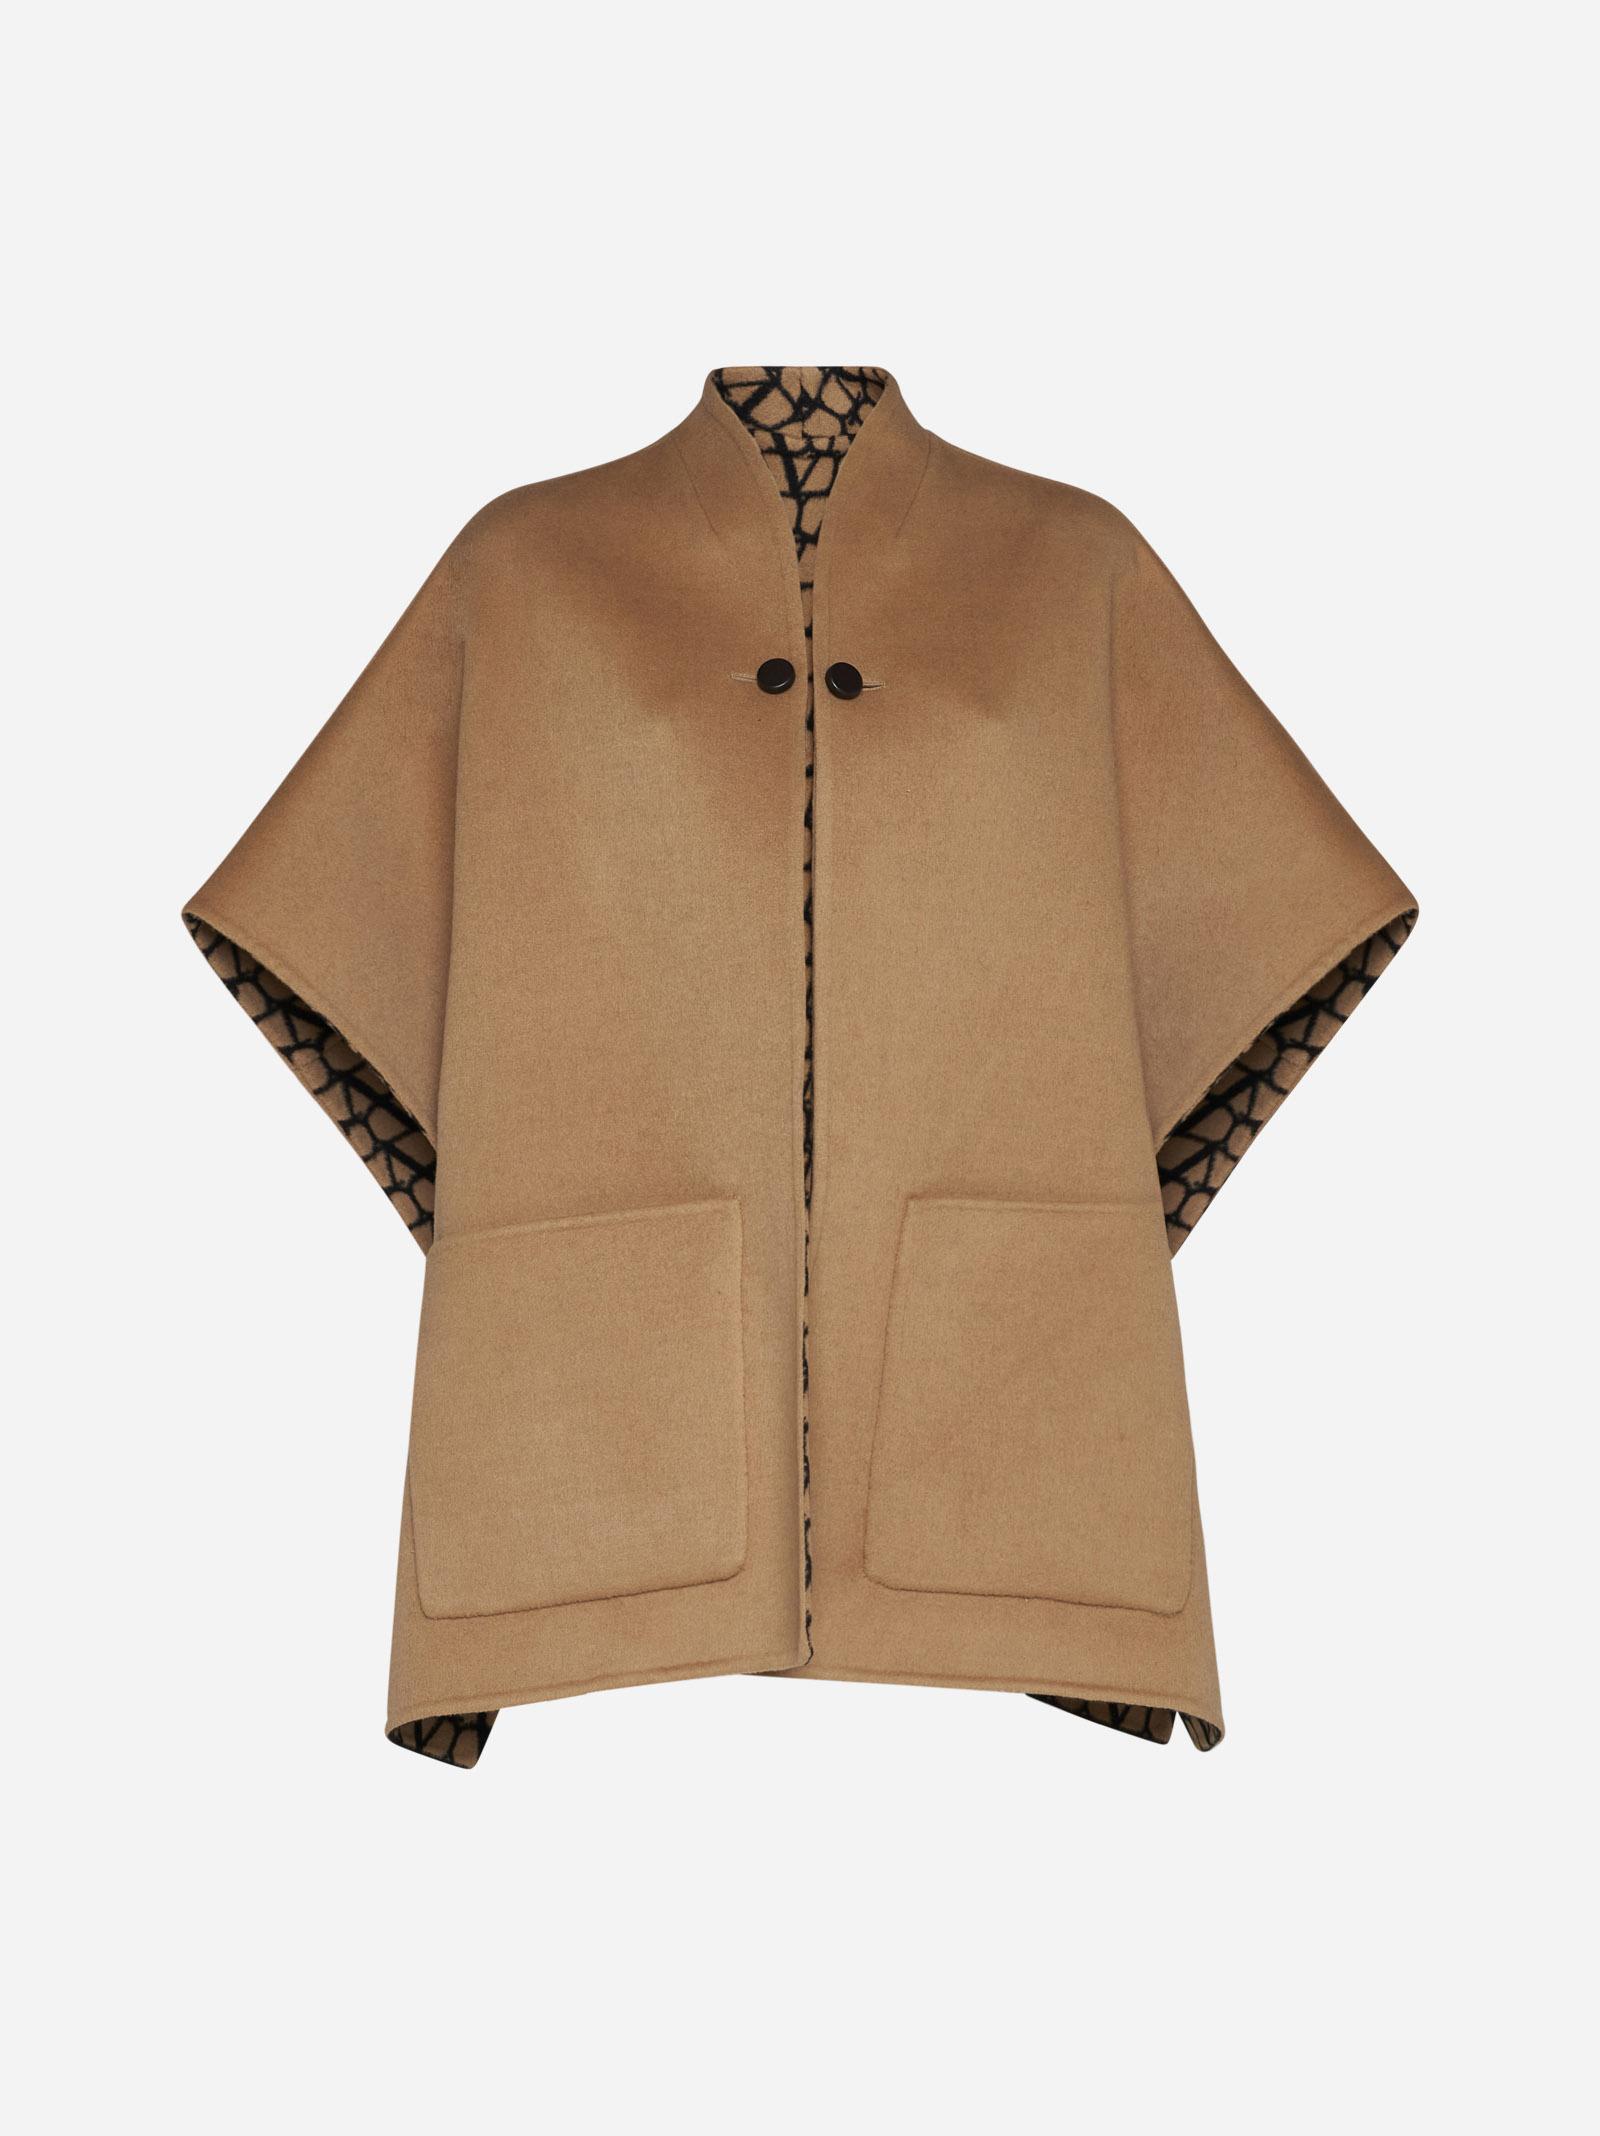 Valentino Black/camel reversible short coat